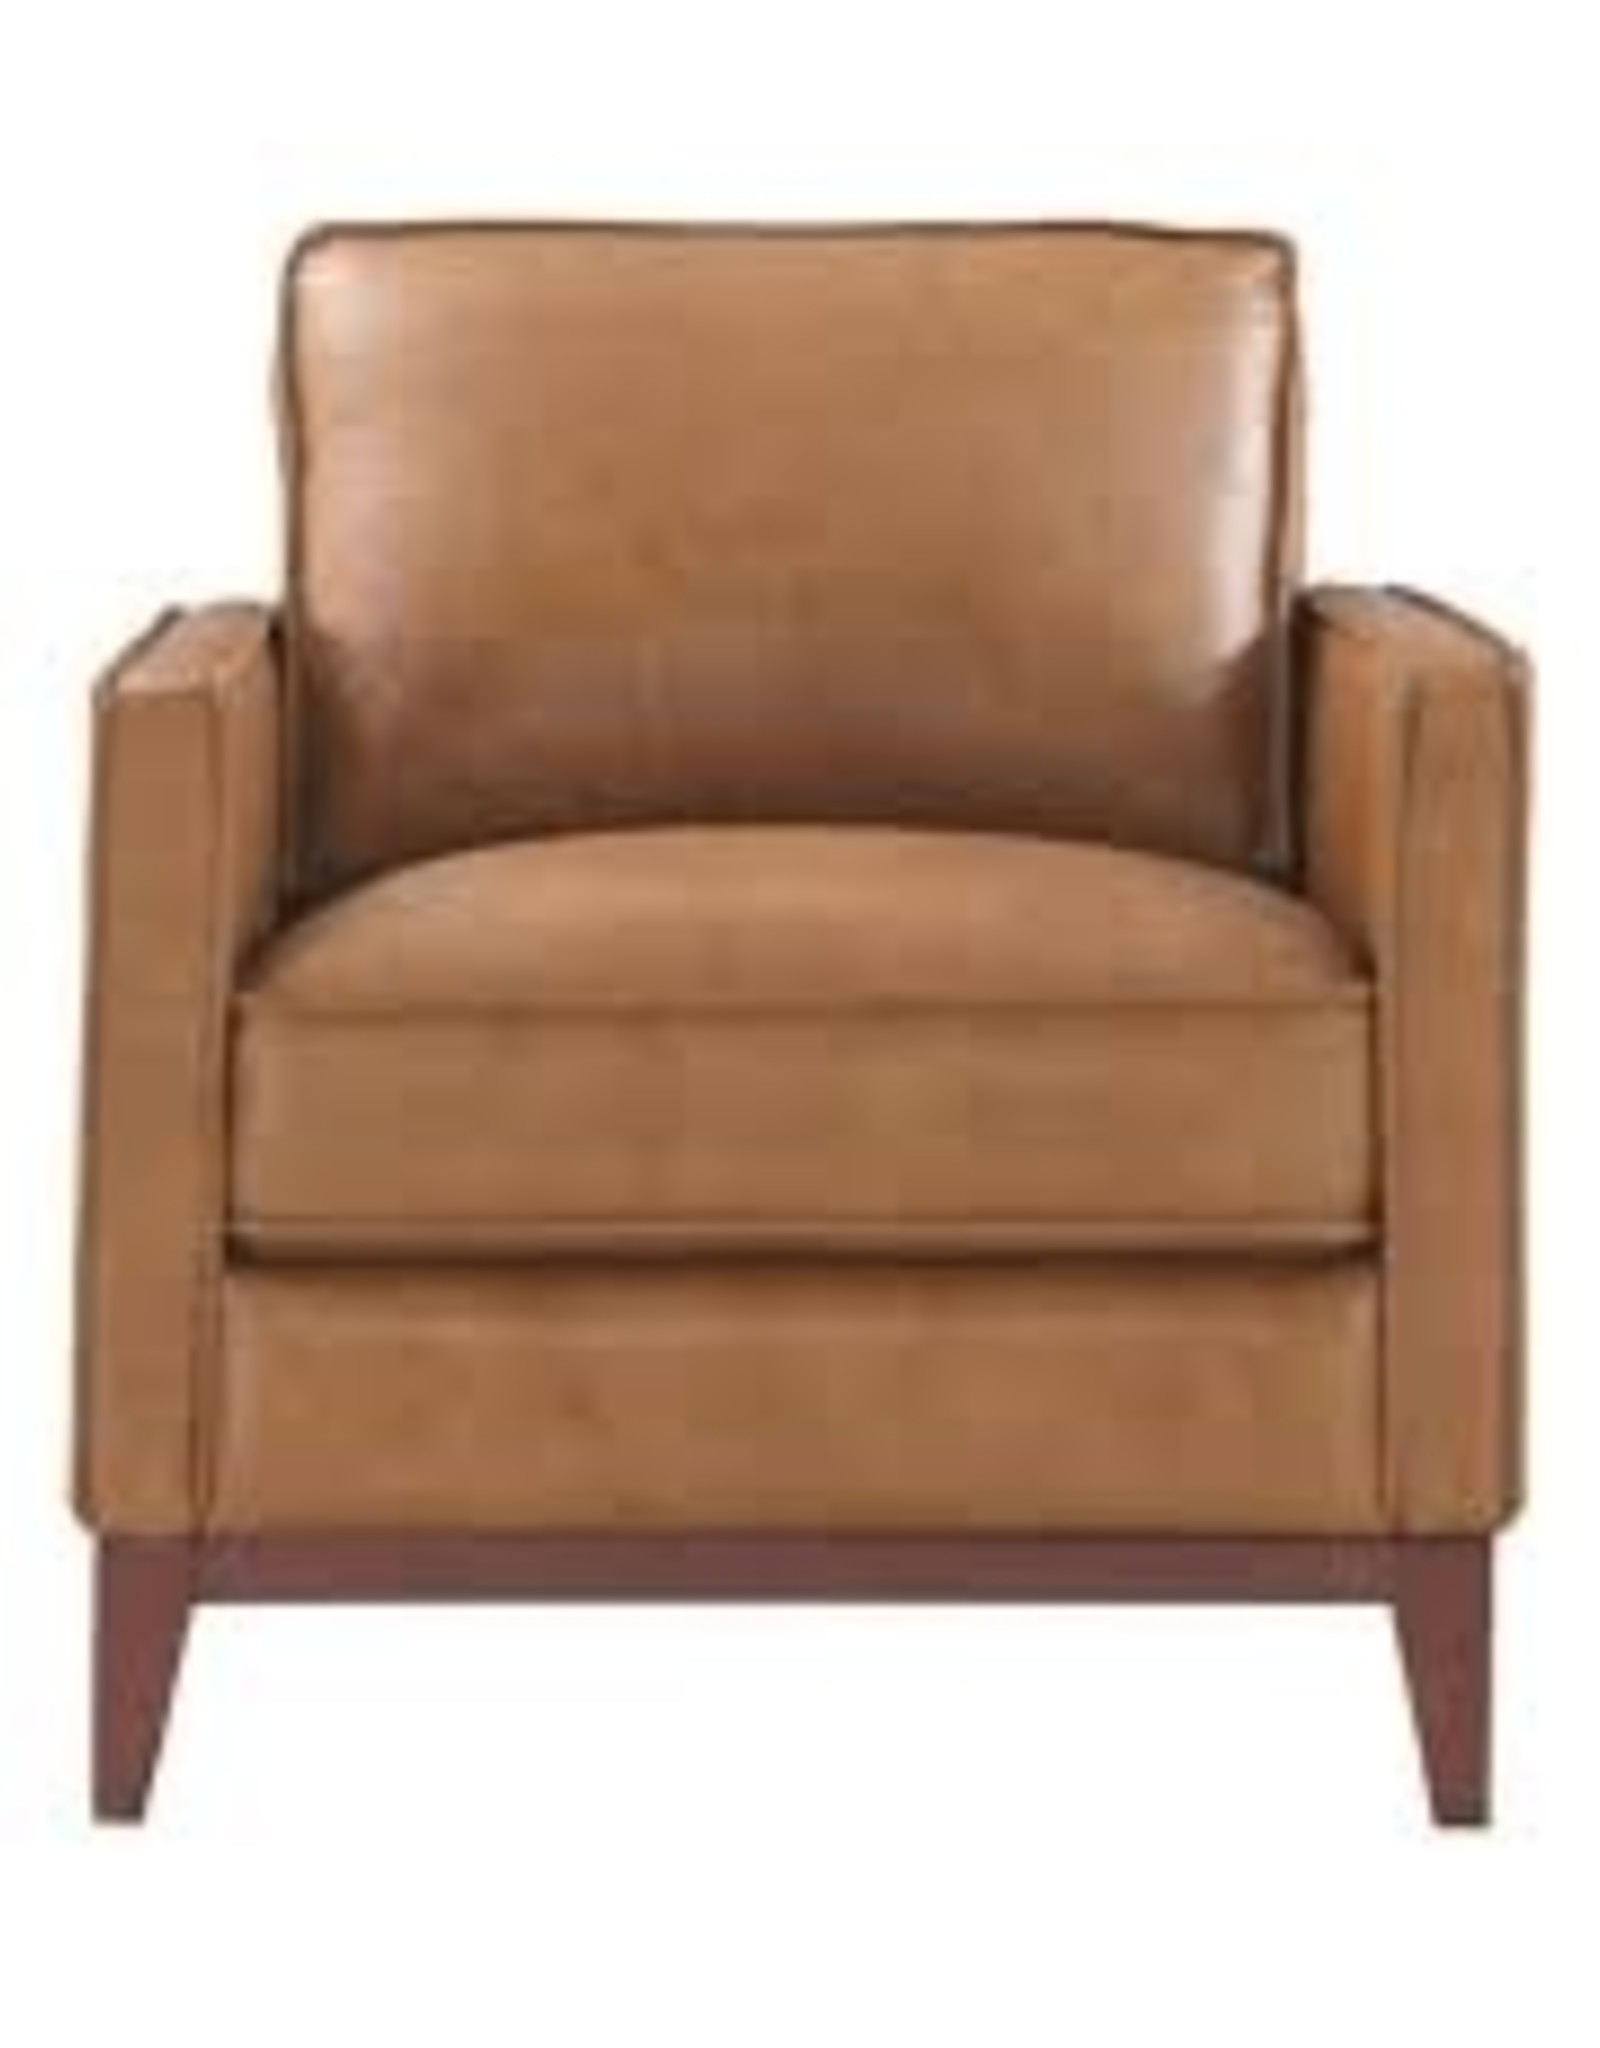 Leather Italian Newport Chair : Camel